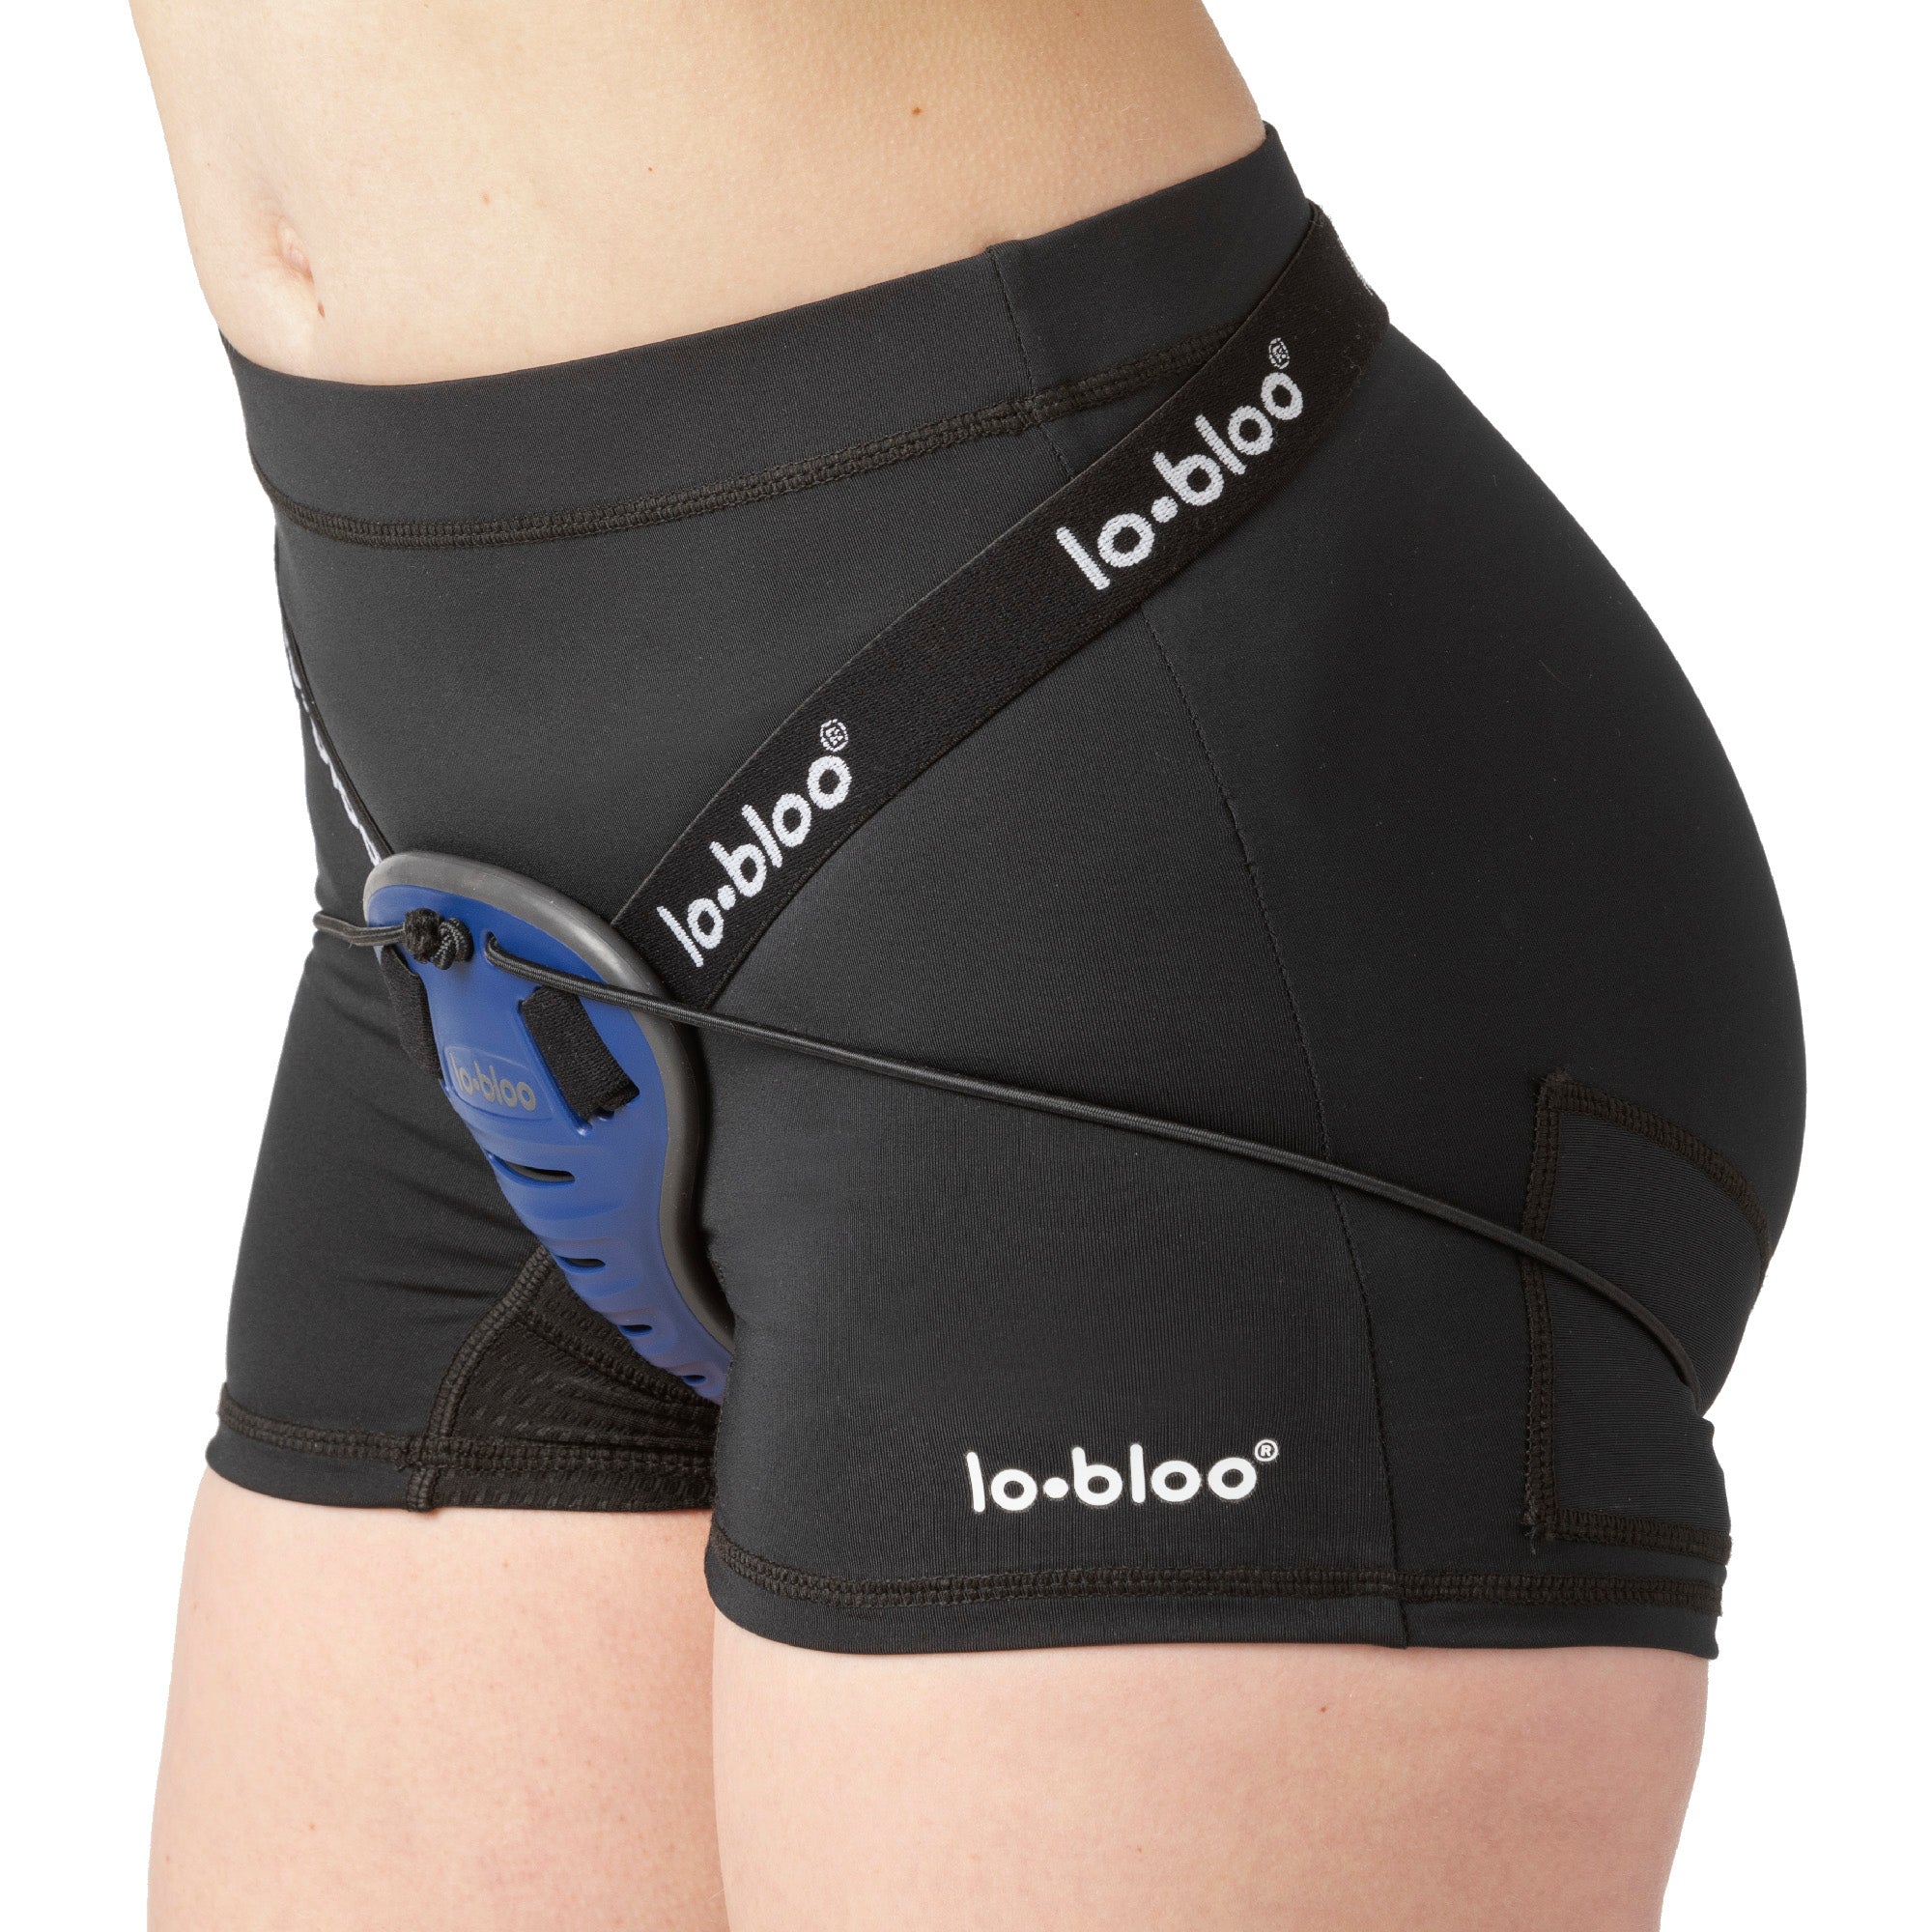 lobloo® FREE pelvic protection